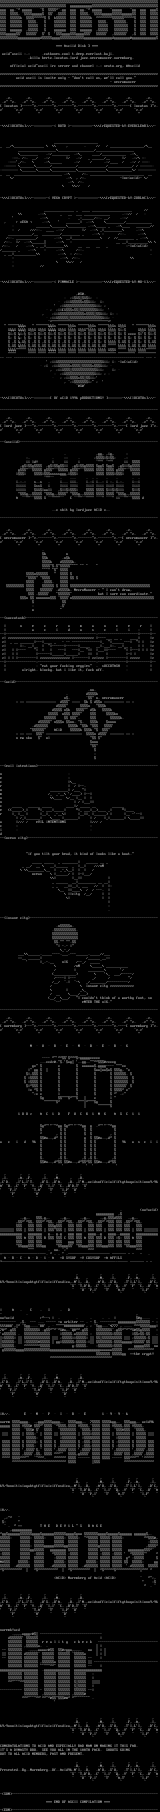 ACiD ASCII logocluster #17 by Multiple Artists